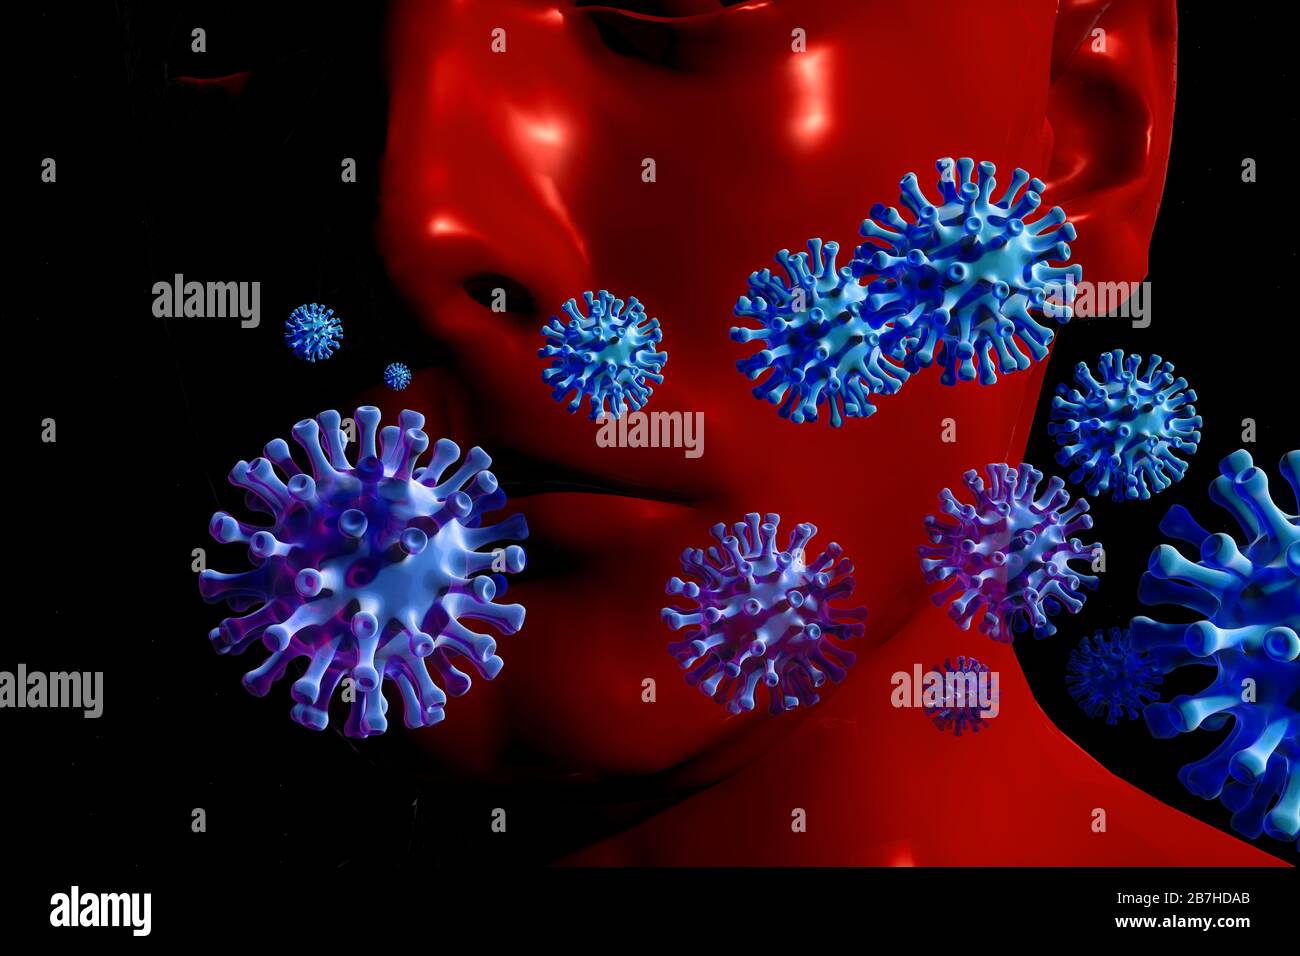 ein fieses virus befaellt die Welt - Symbolbild: CGI-Visualizierung: Coronavirus Covid 19, SARS 2,Mensch/ un nuevo virus horrible infecta el planeta tierra - Foto de stock